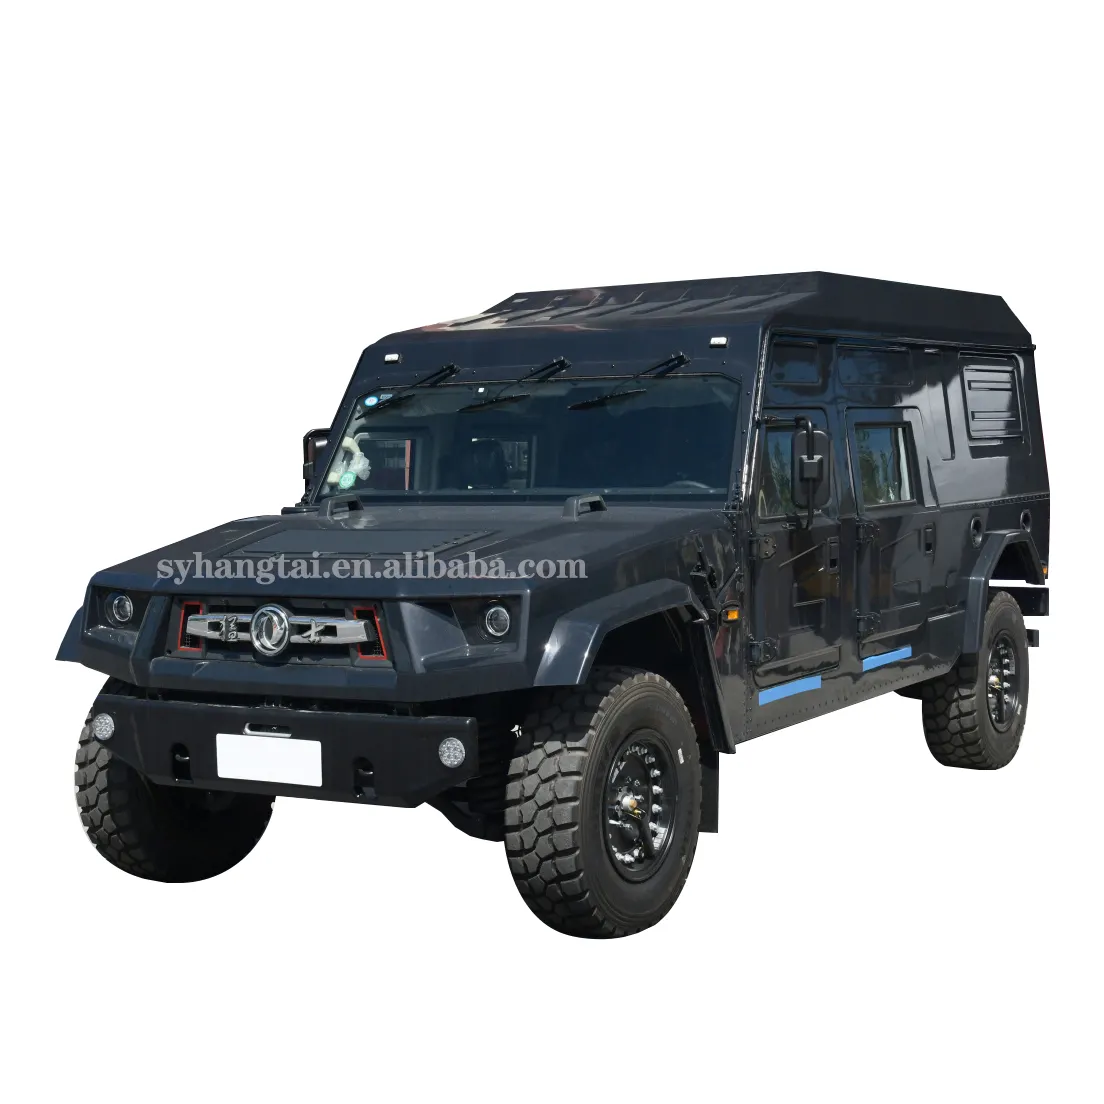 Coche diésel 4WD de gran oferta de China, furgoneta para realizar tareas variadas en vehículo de emergencia de montañas